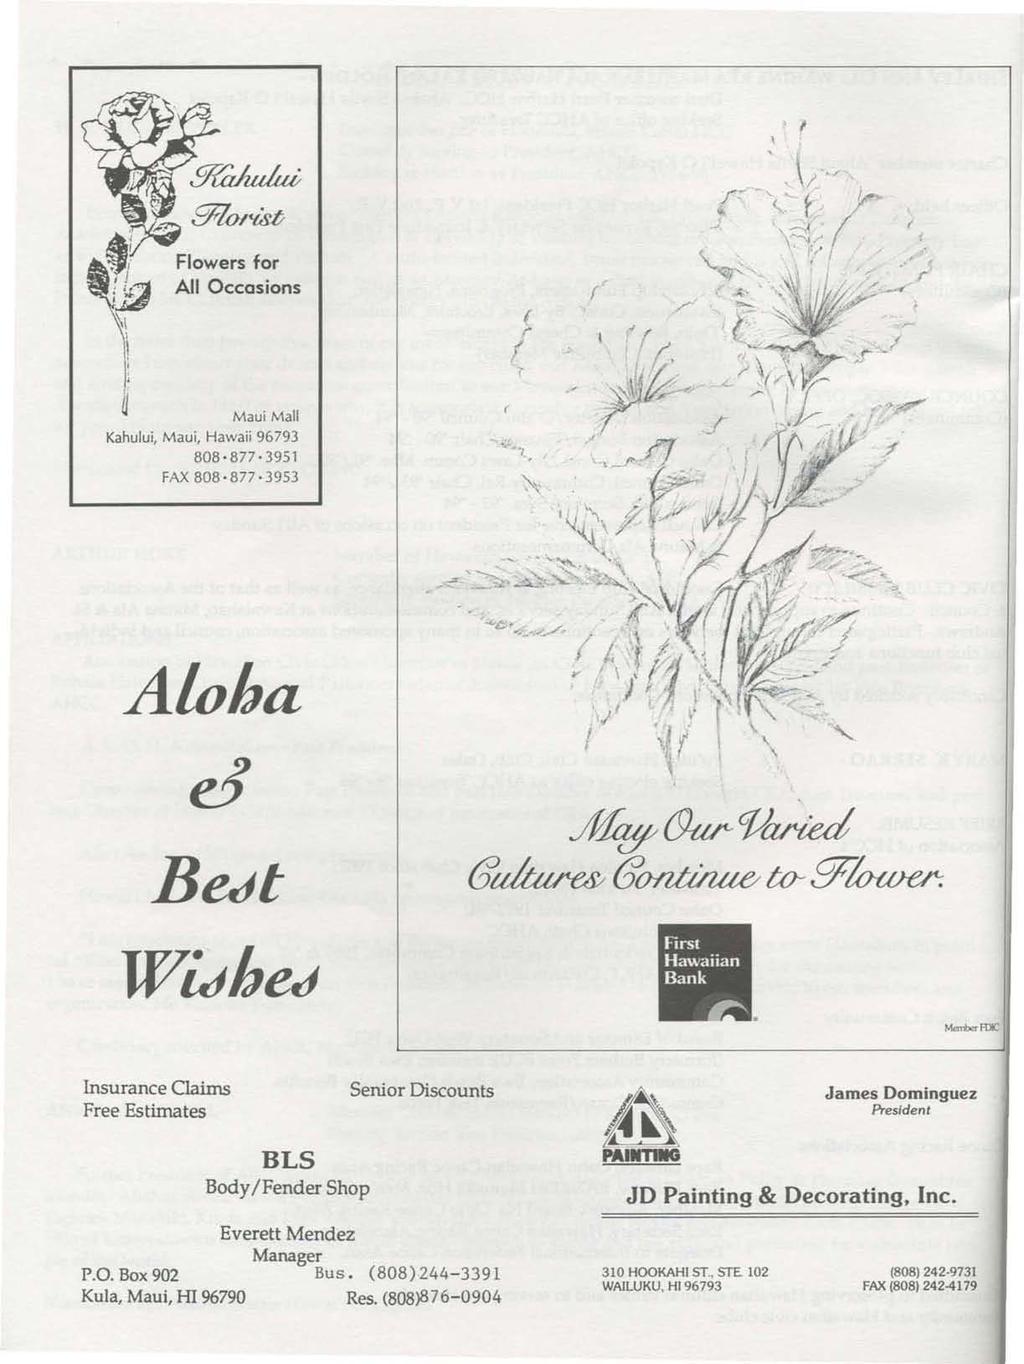 ( Flowers for All Occasions { r ( r / r Maui Mall Kahului, Maui. Hawaii 96793 808,877,3951 FAX BOB, 877,3953 '/ > Aloba I.